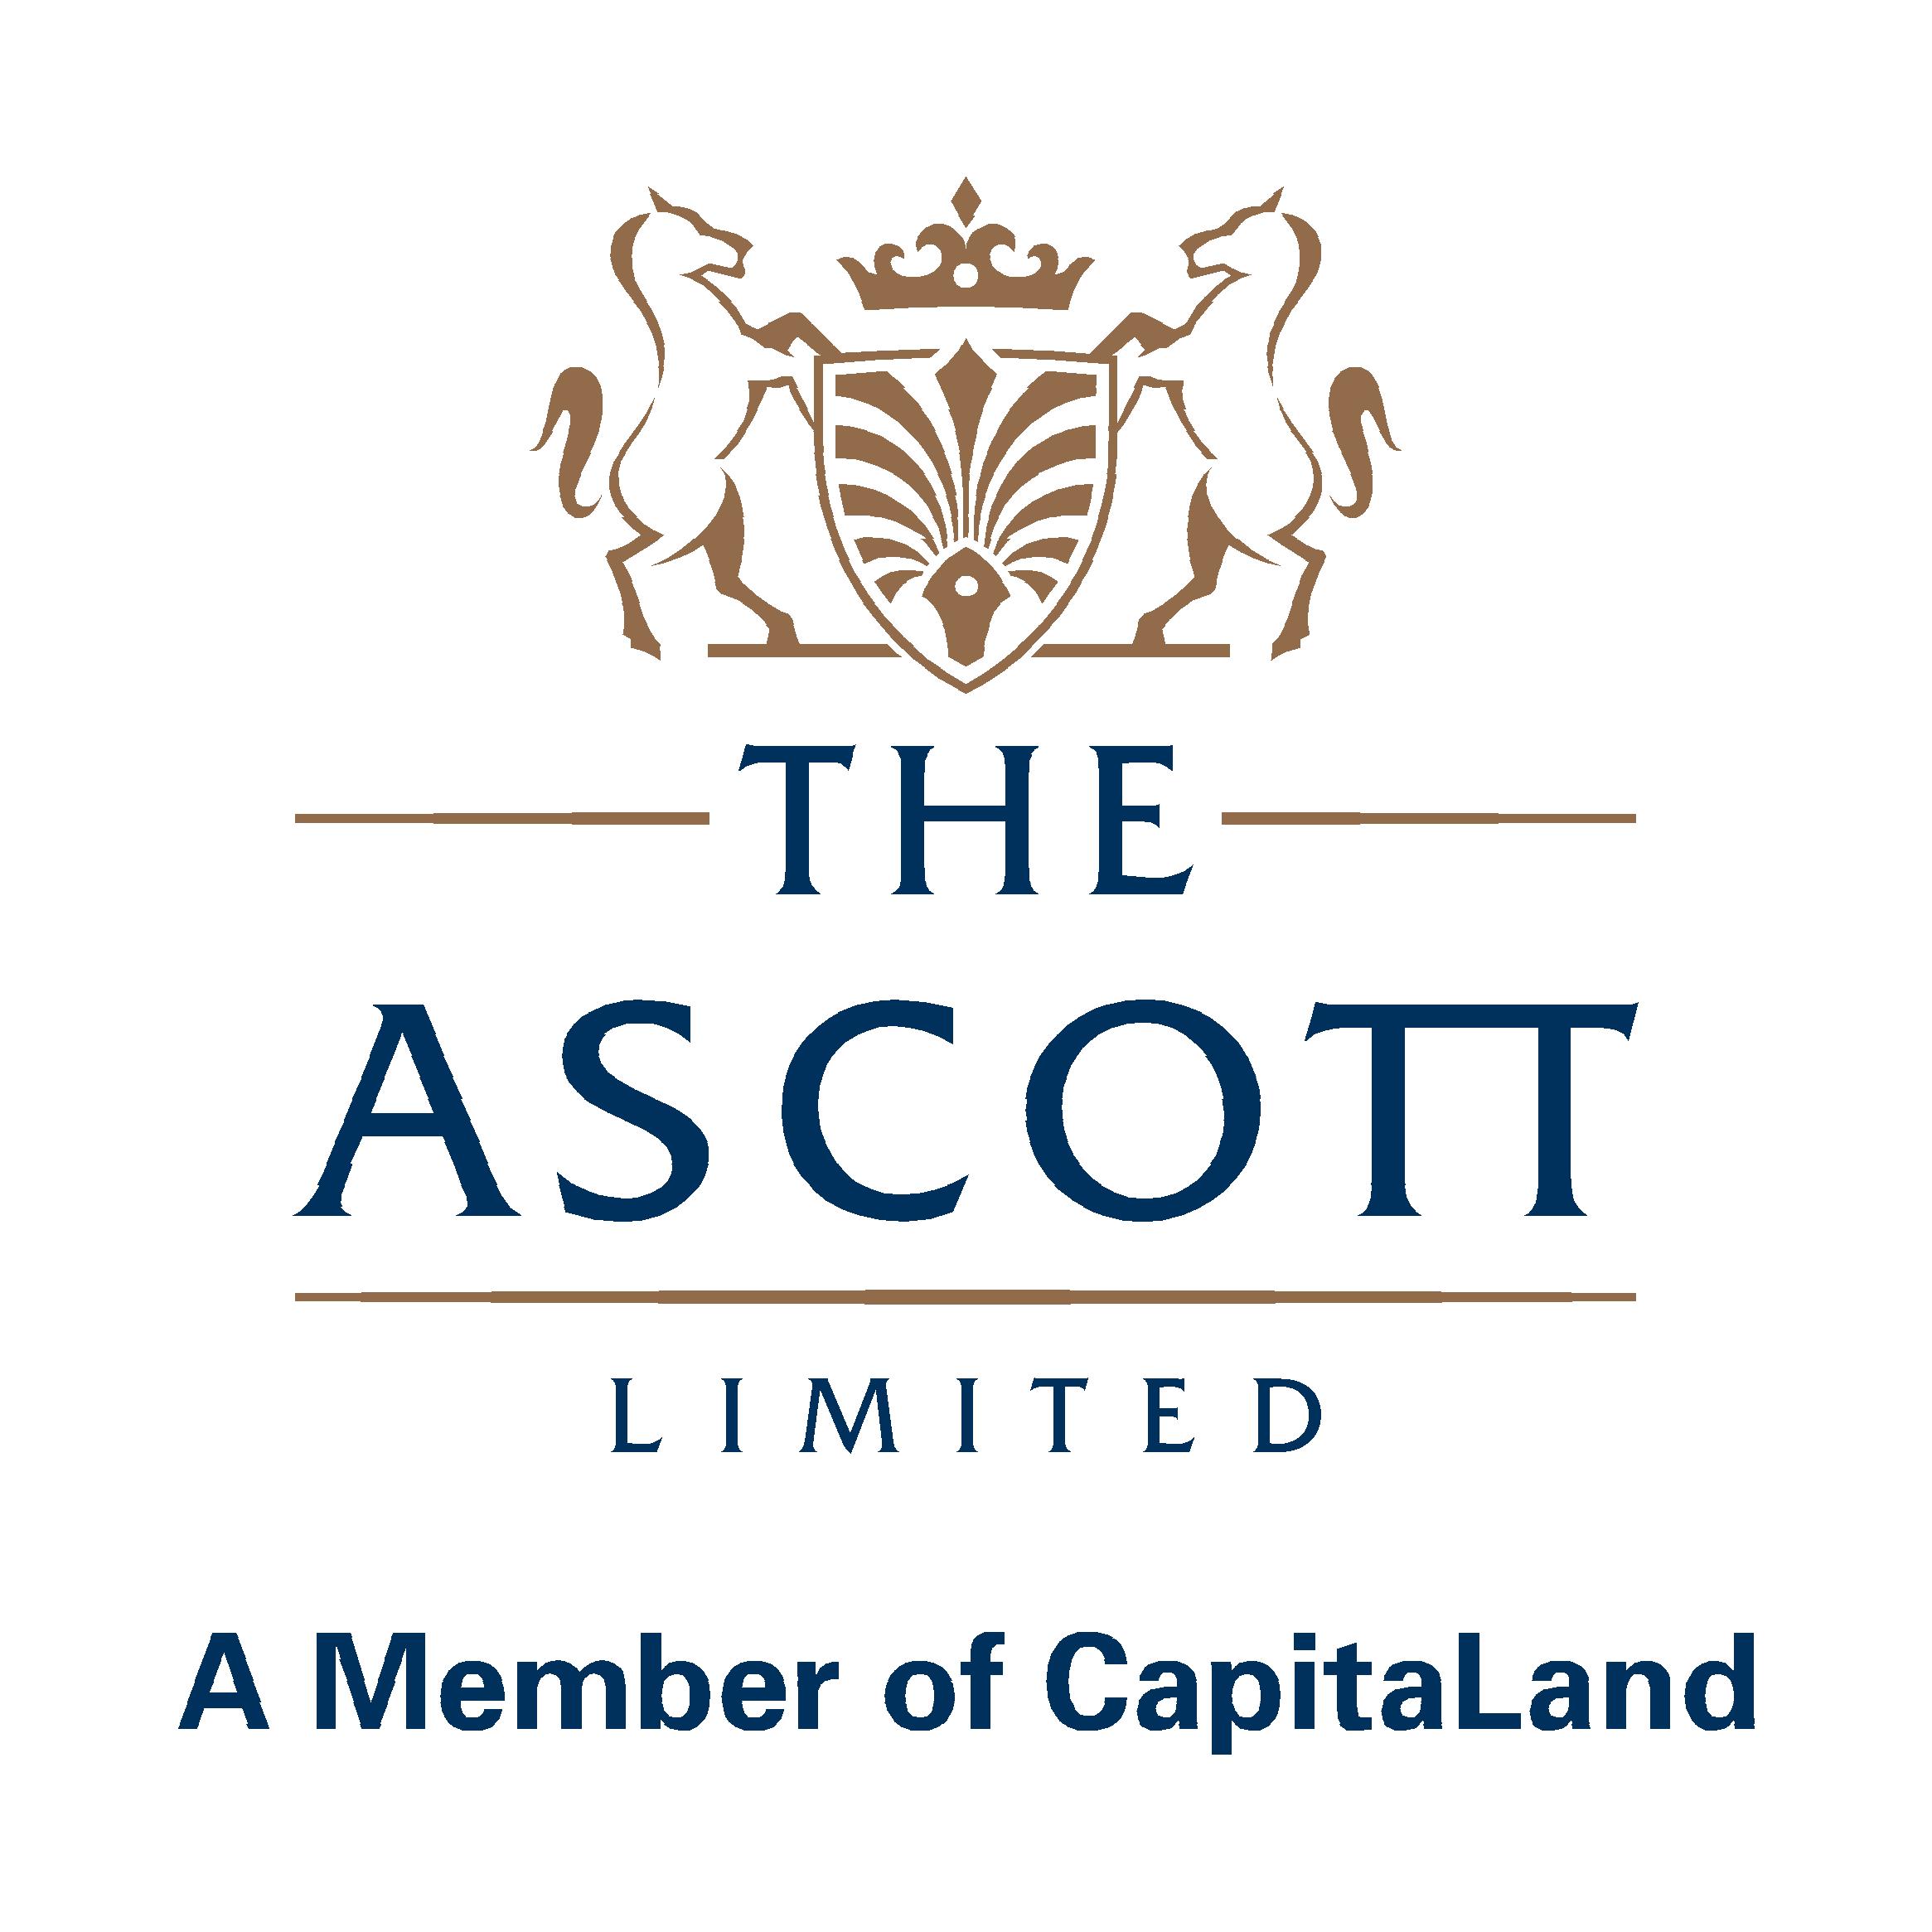 Ascott Brand Logo